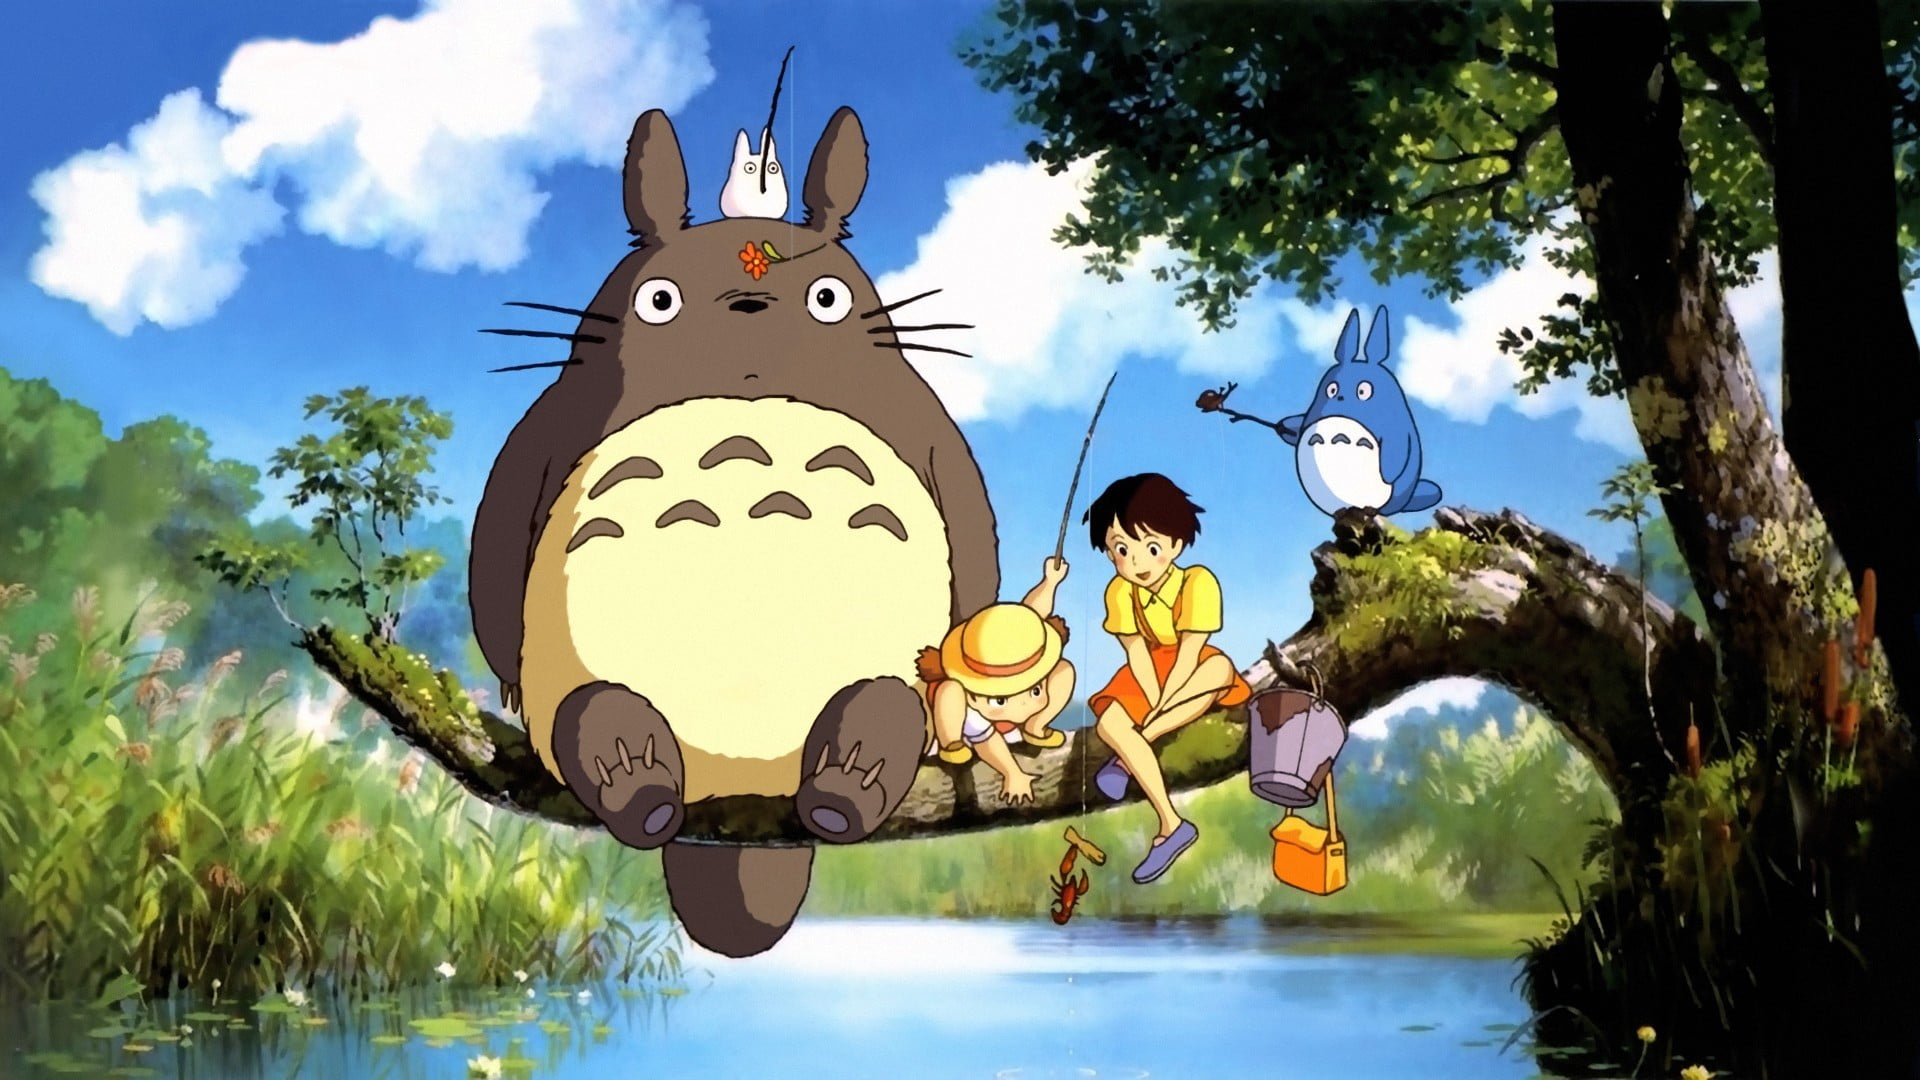 female cartoon character illustration, Totoro, My Neighbor Totoro, anime, Hayao Miyazaki